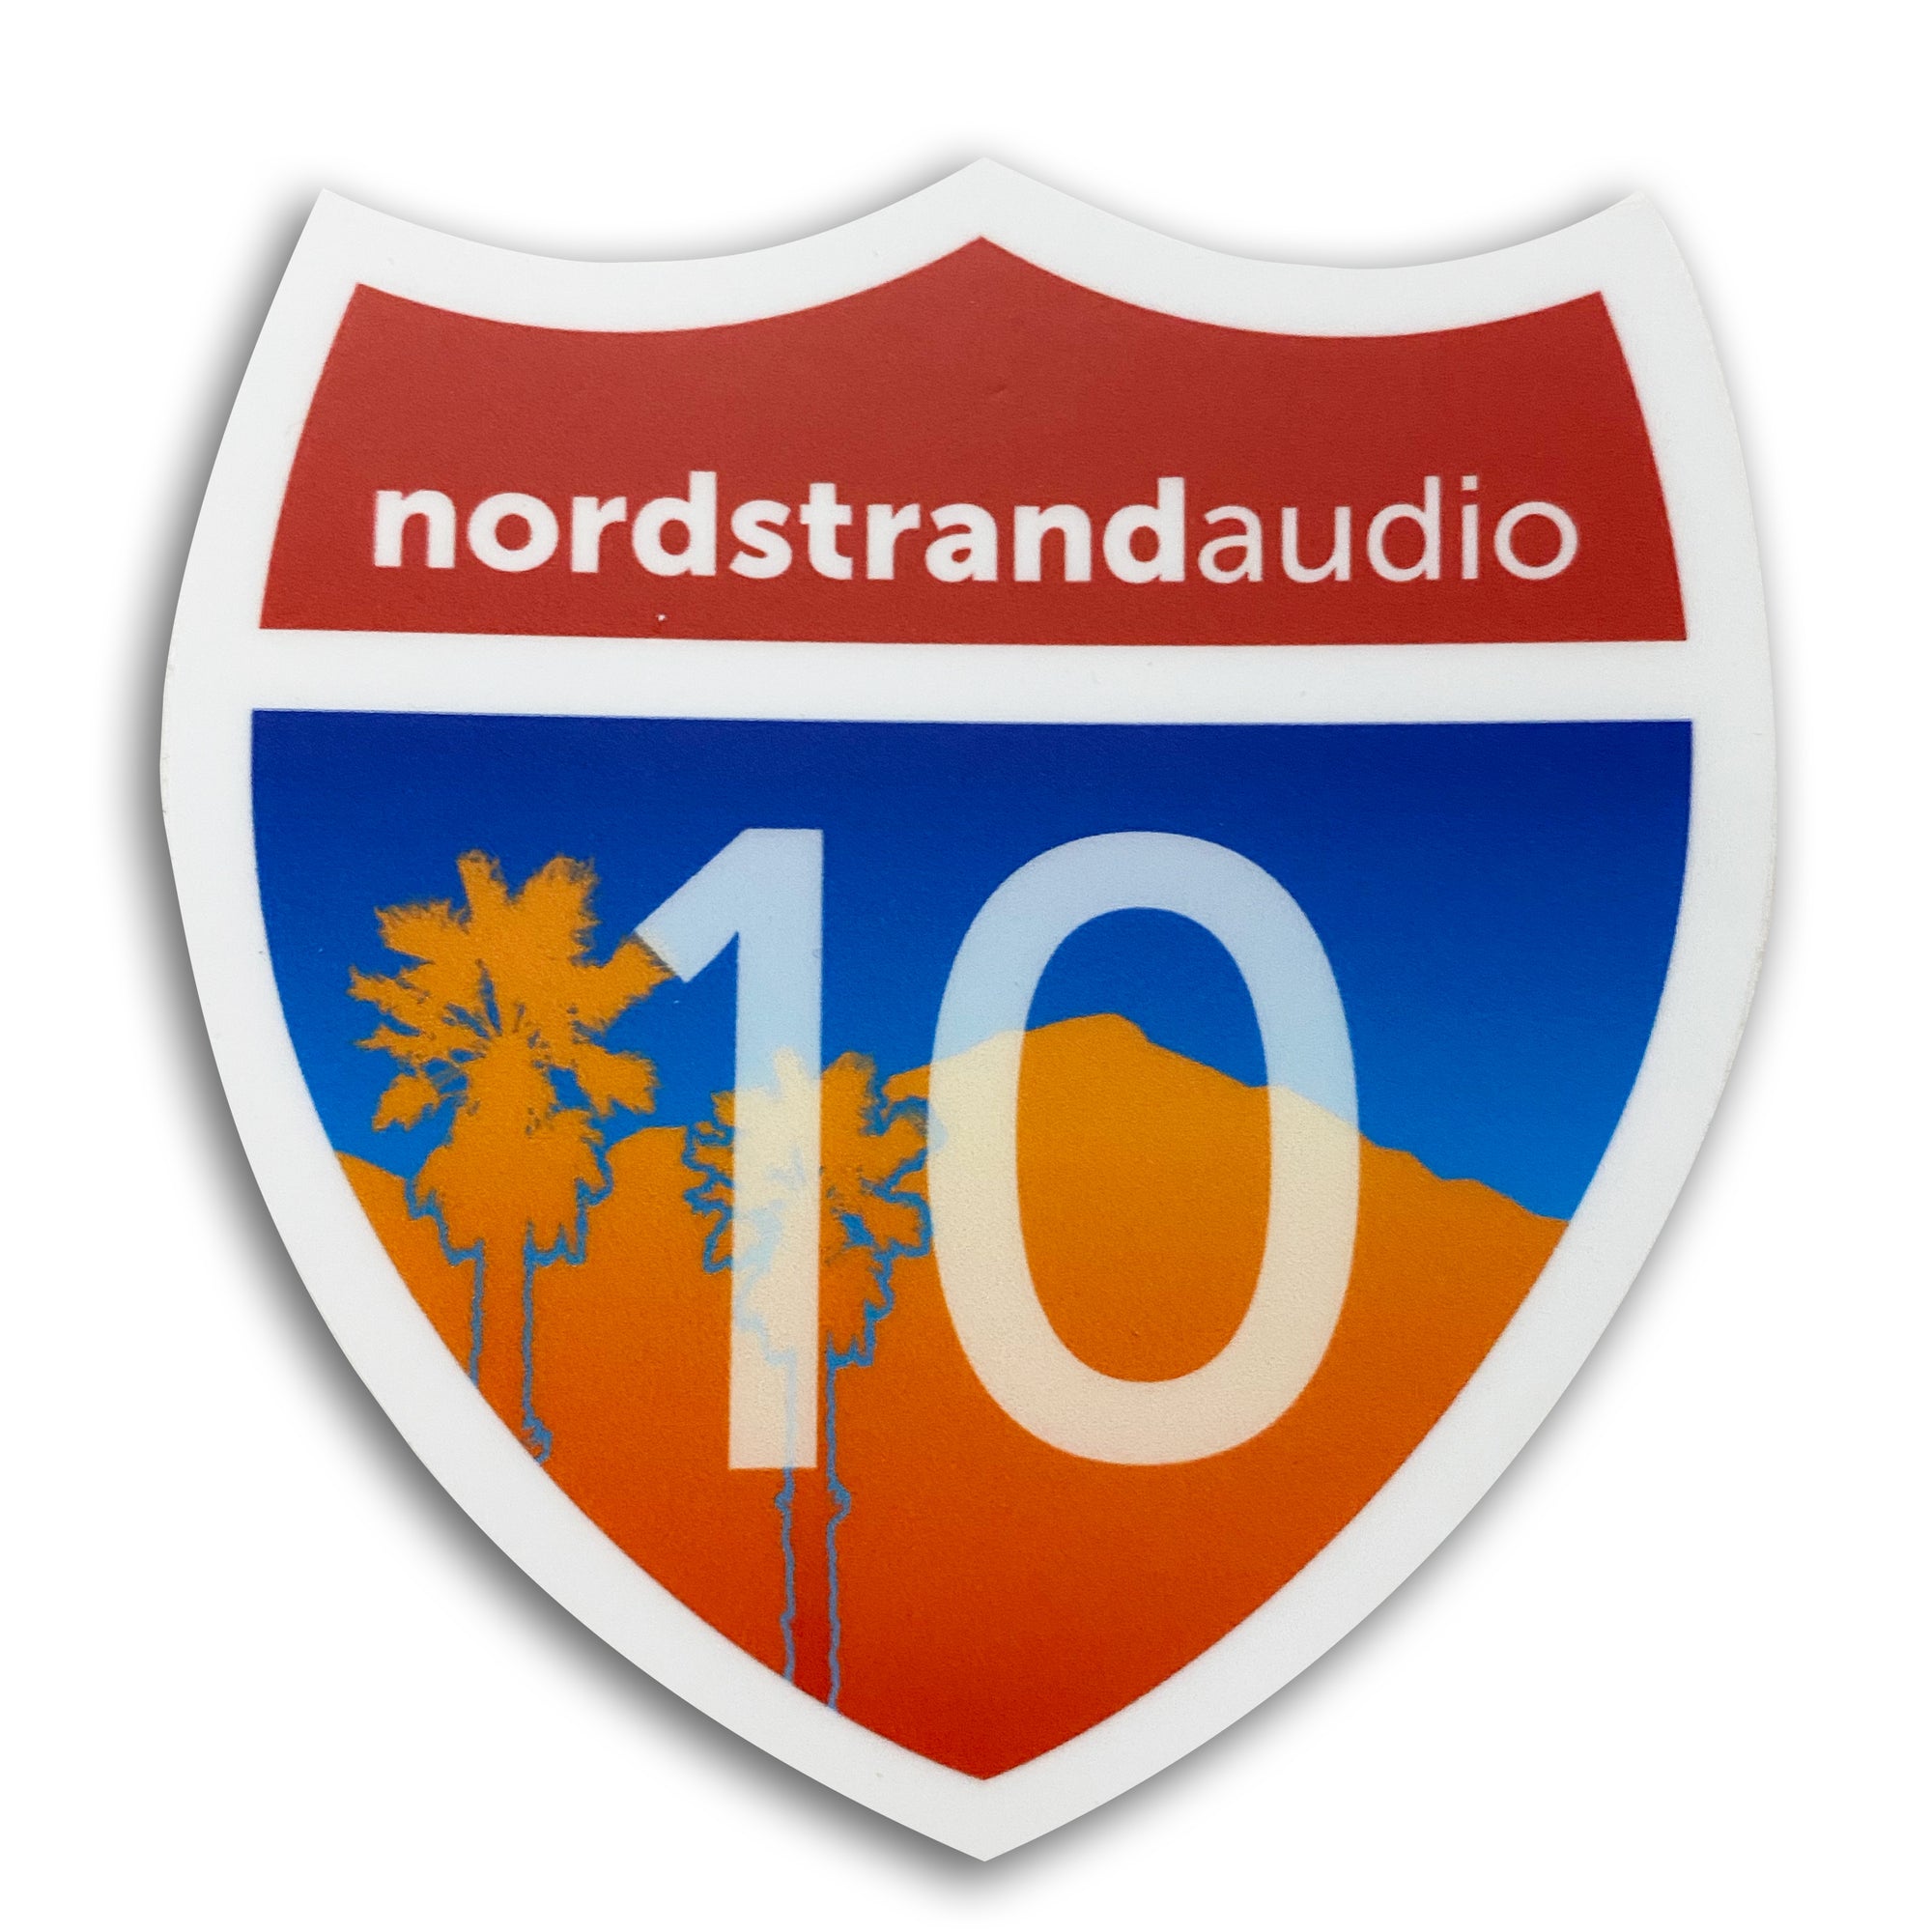 Hot Tone Stainless Steel Travel Mug - Nordstrand Audio